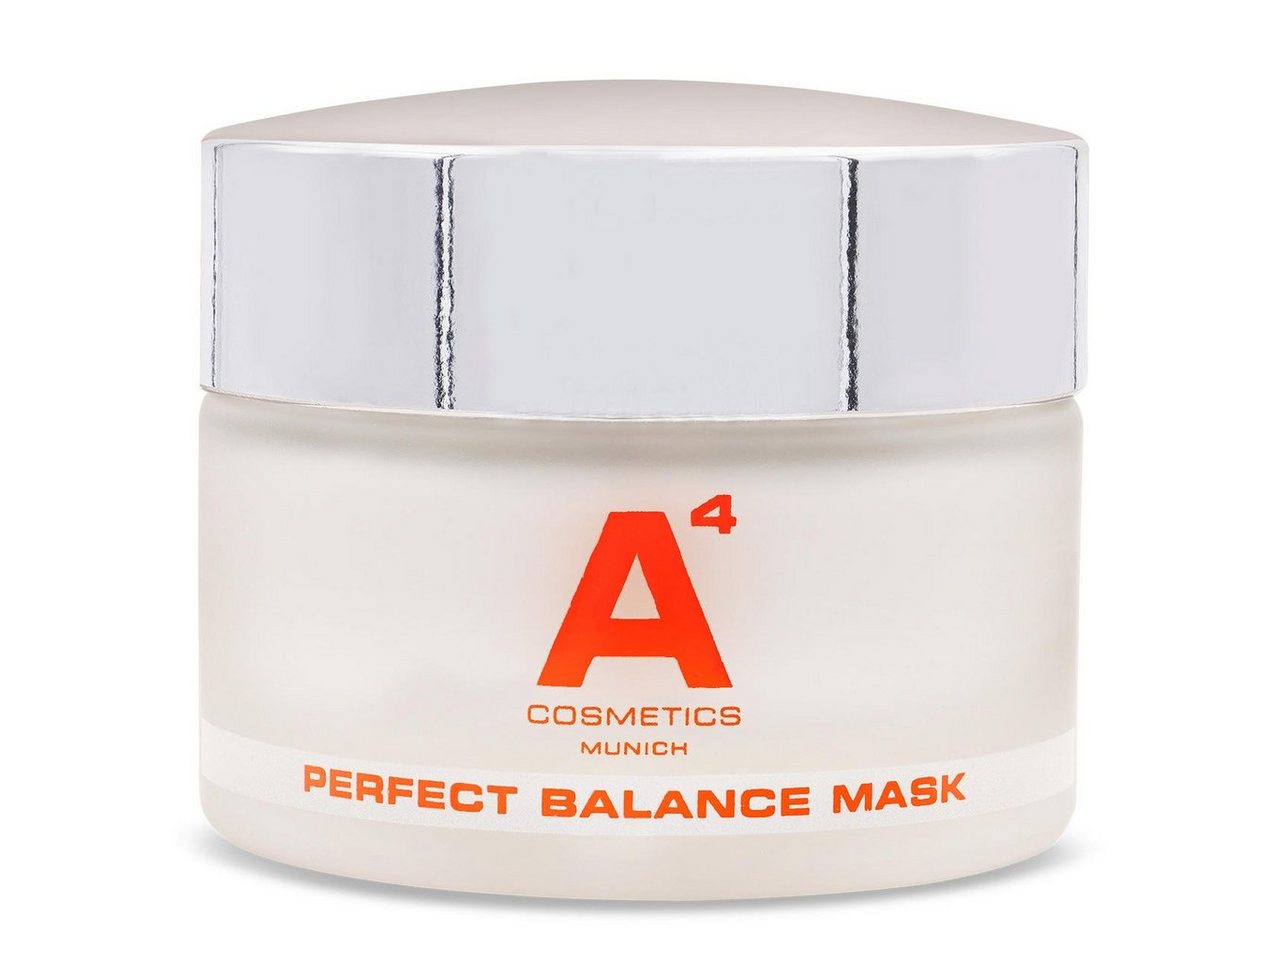 A4 Cosmetics Gesichtspflege Perfect Balance Mask von A4 Cosmetics